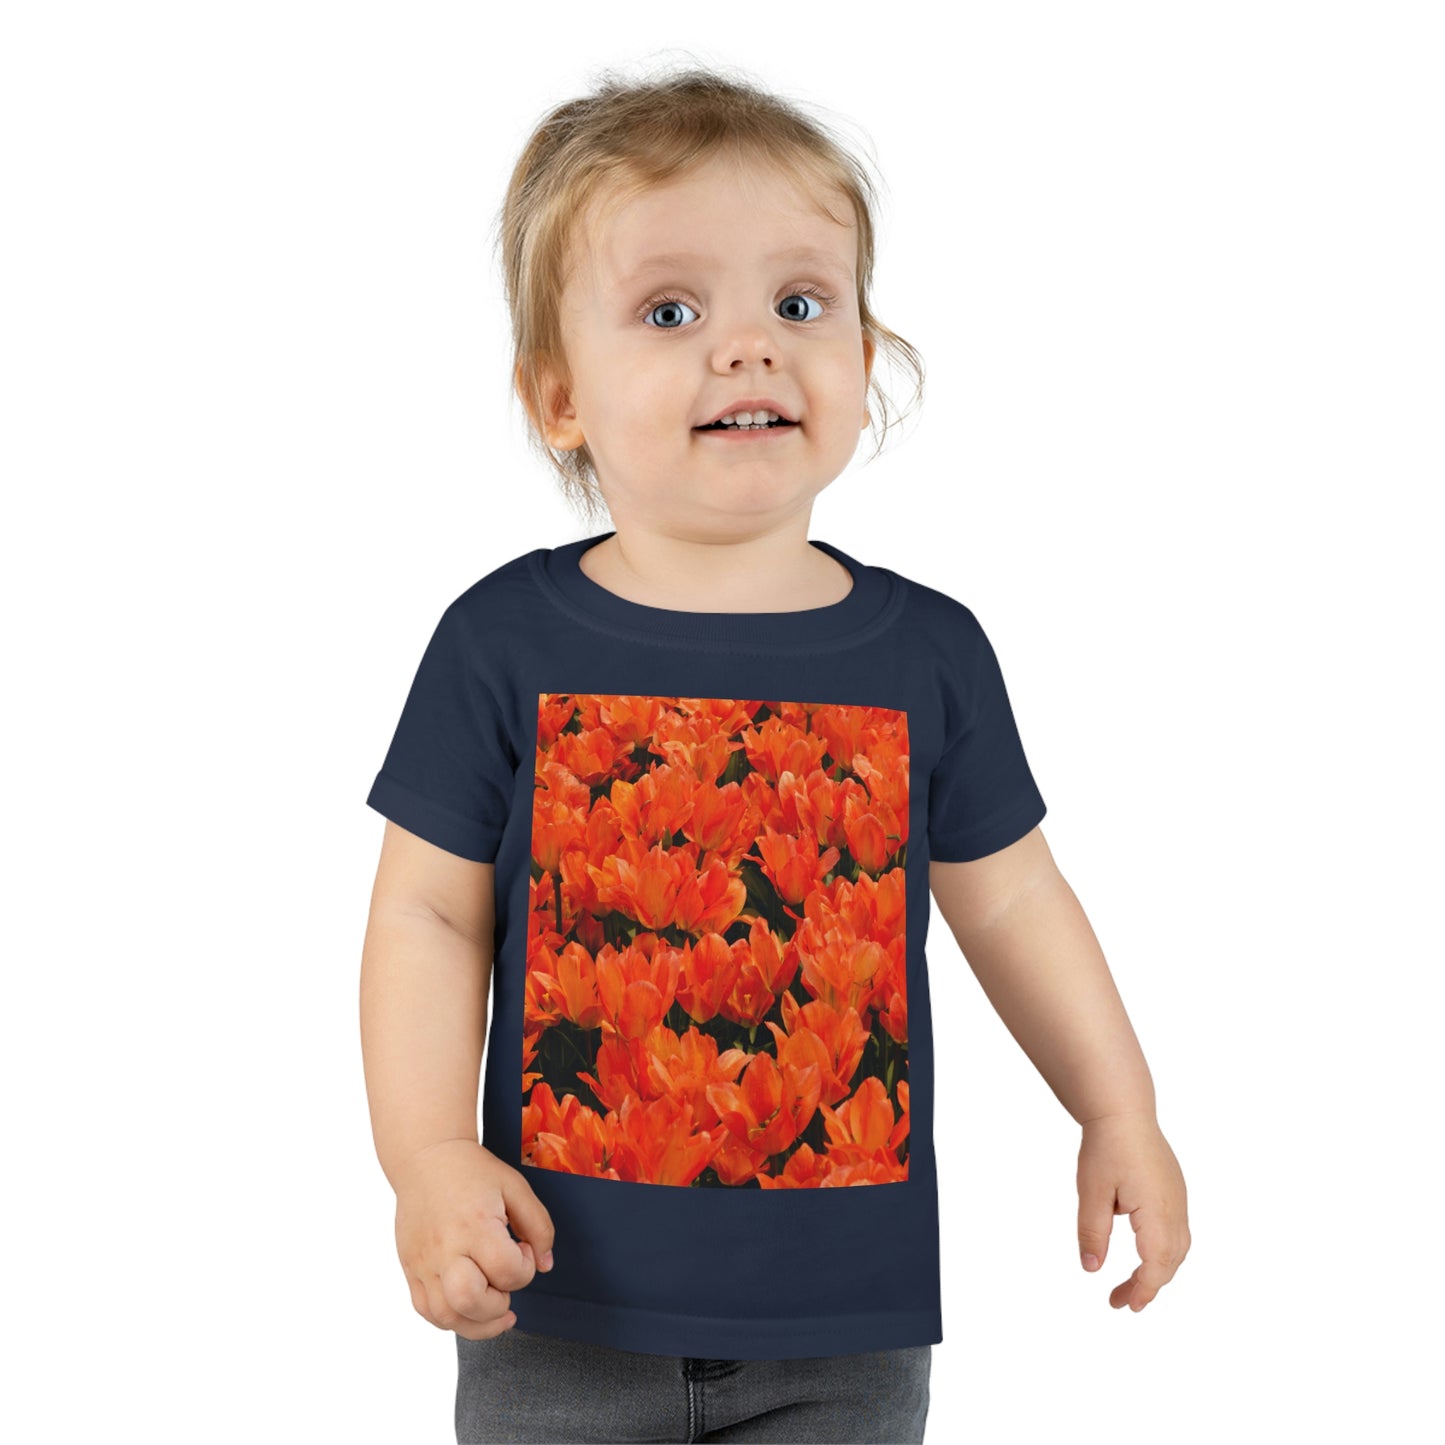 Flowers 03 Toddler T-shirt